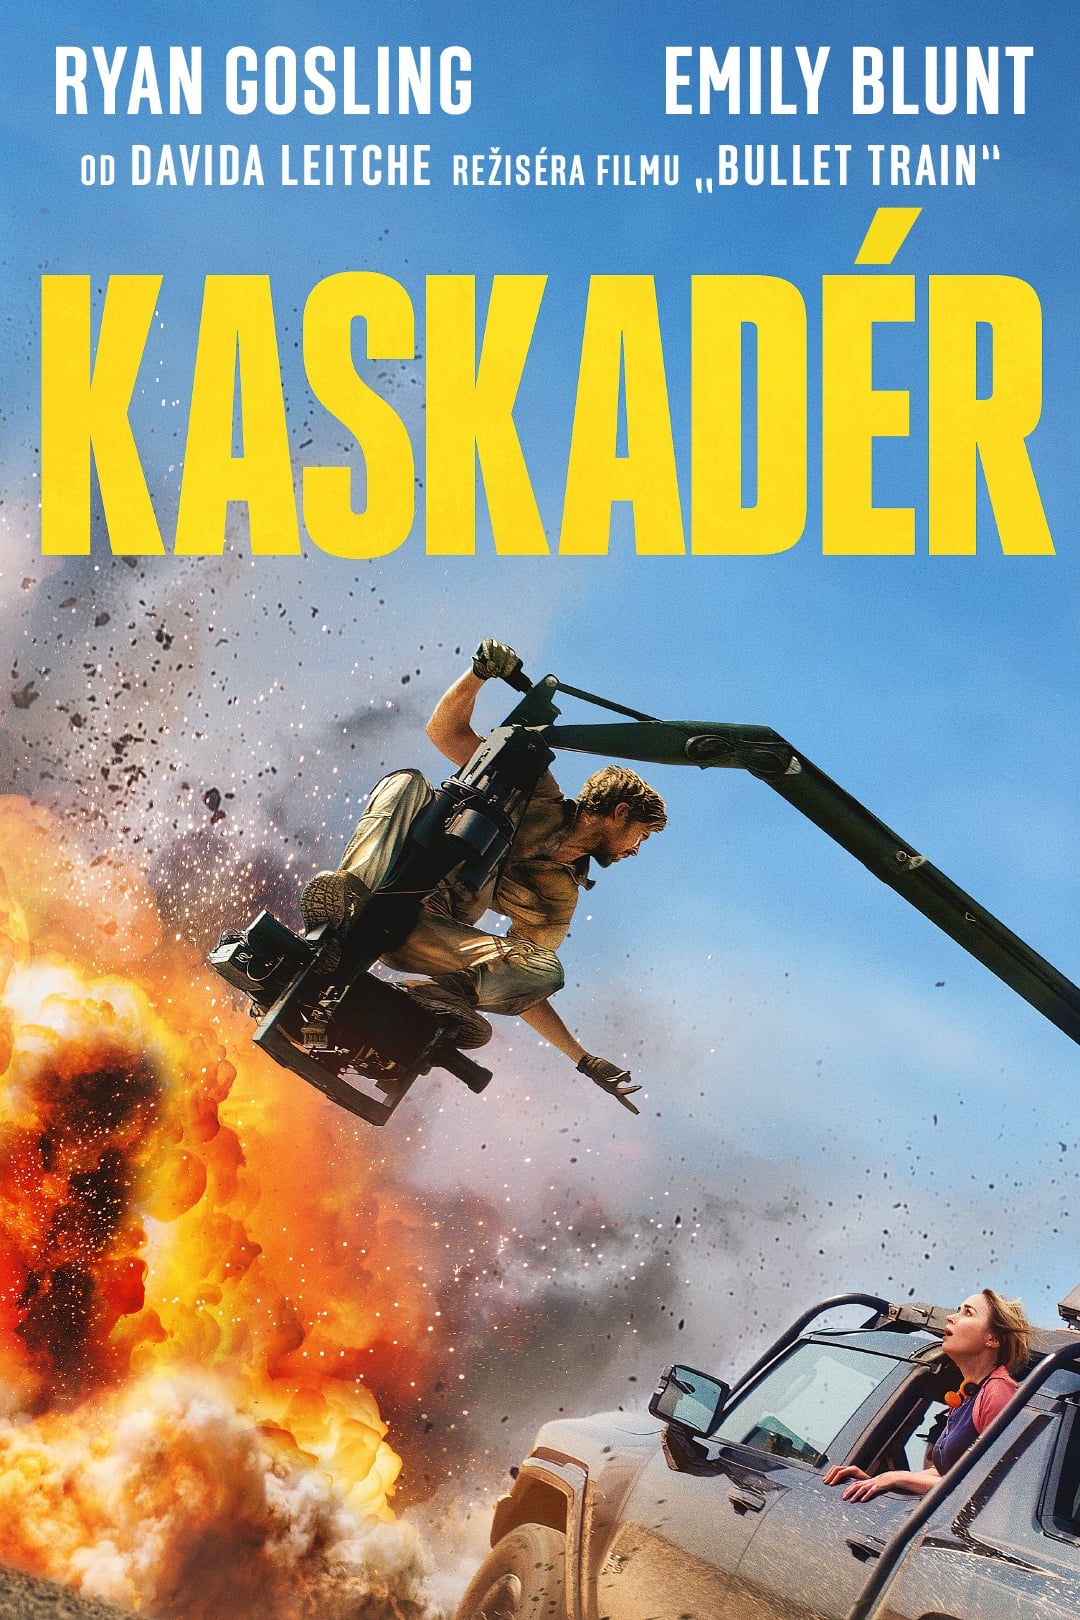 Poster for the movie "Kaskadér"